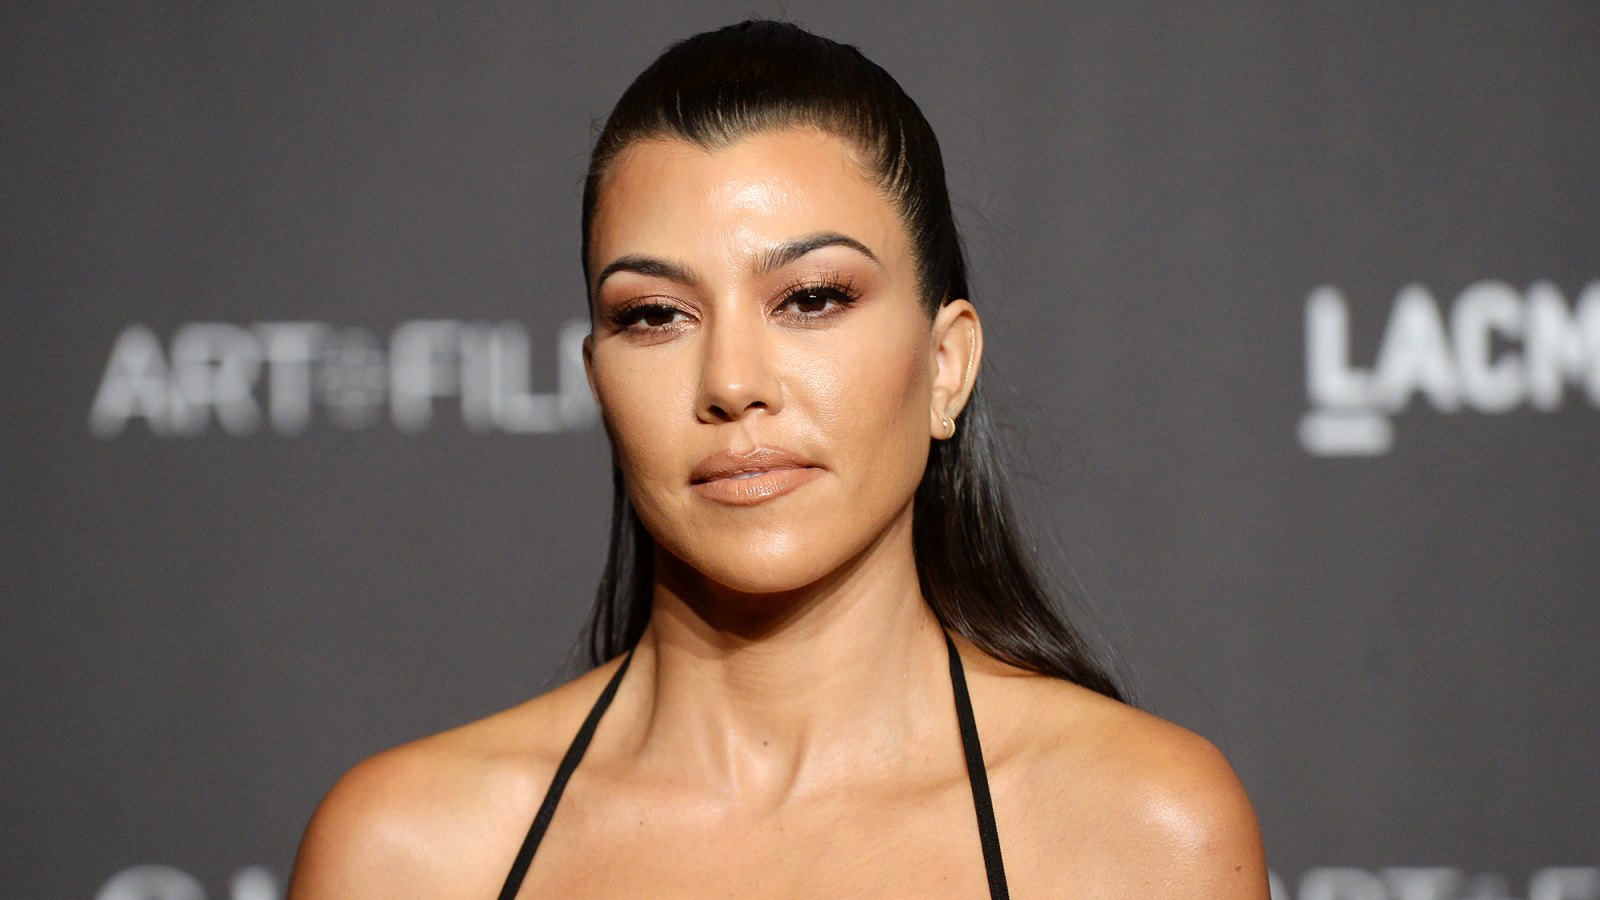 Kourtney Kardashian Slams Claims the Keto Diet Is 'Unhealthy'